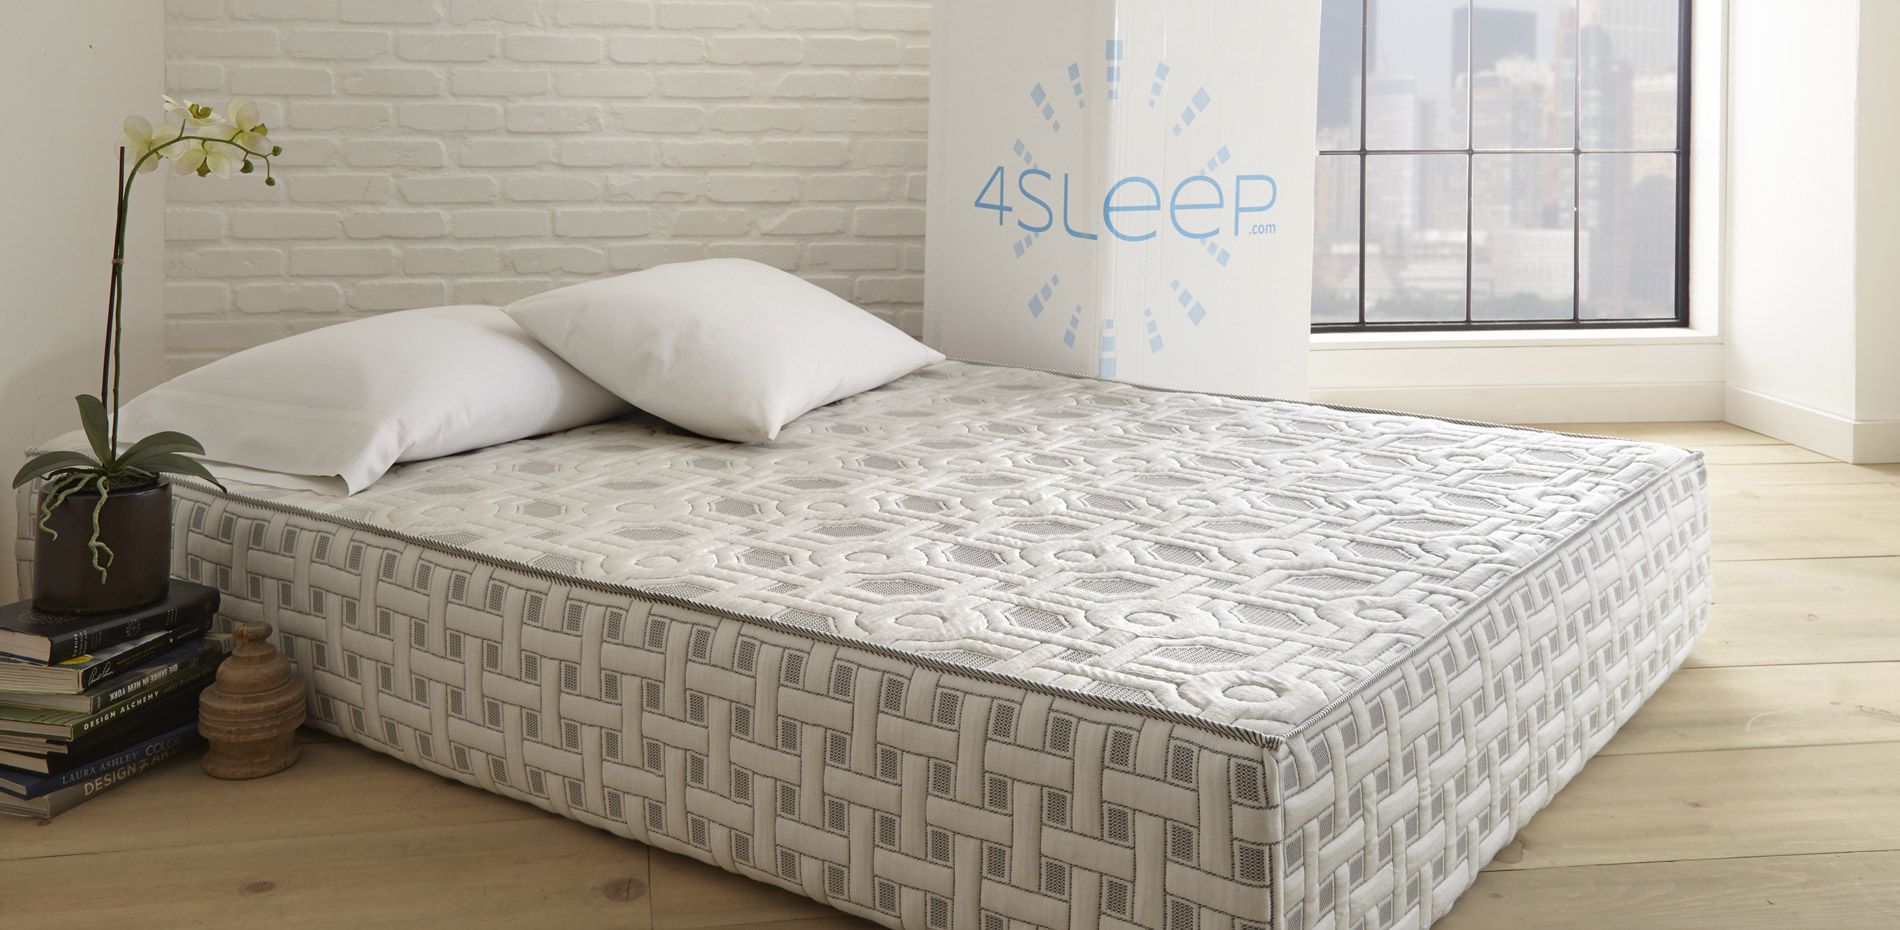 4sleep mattress